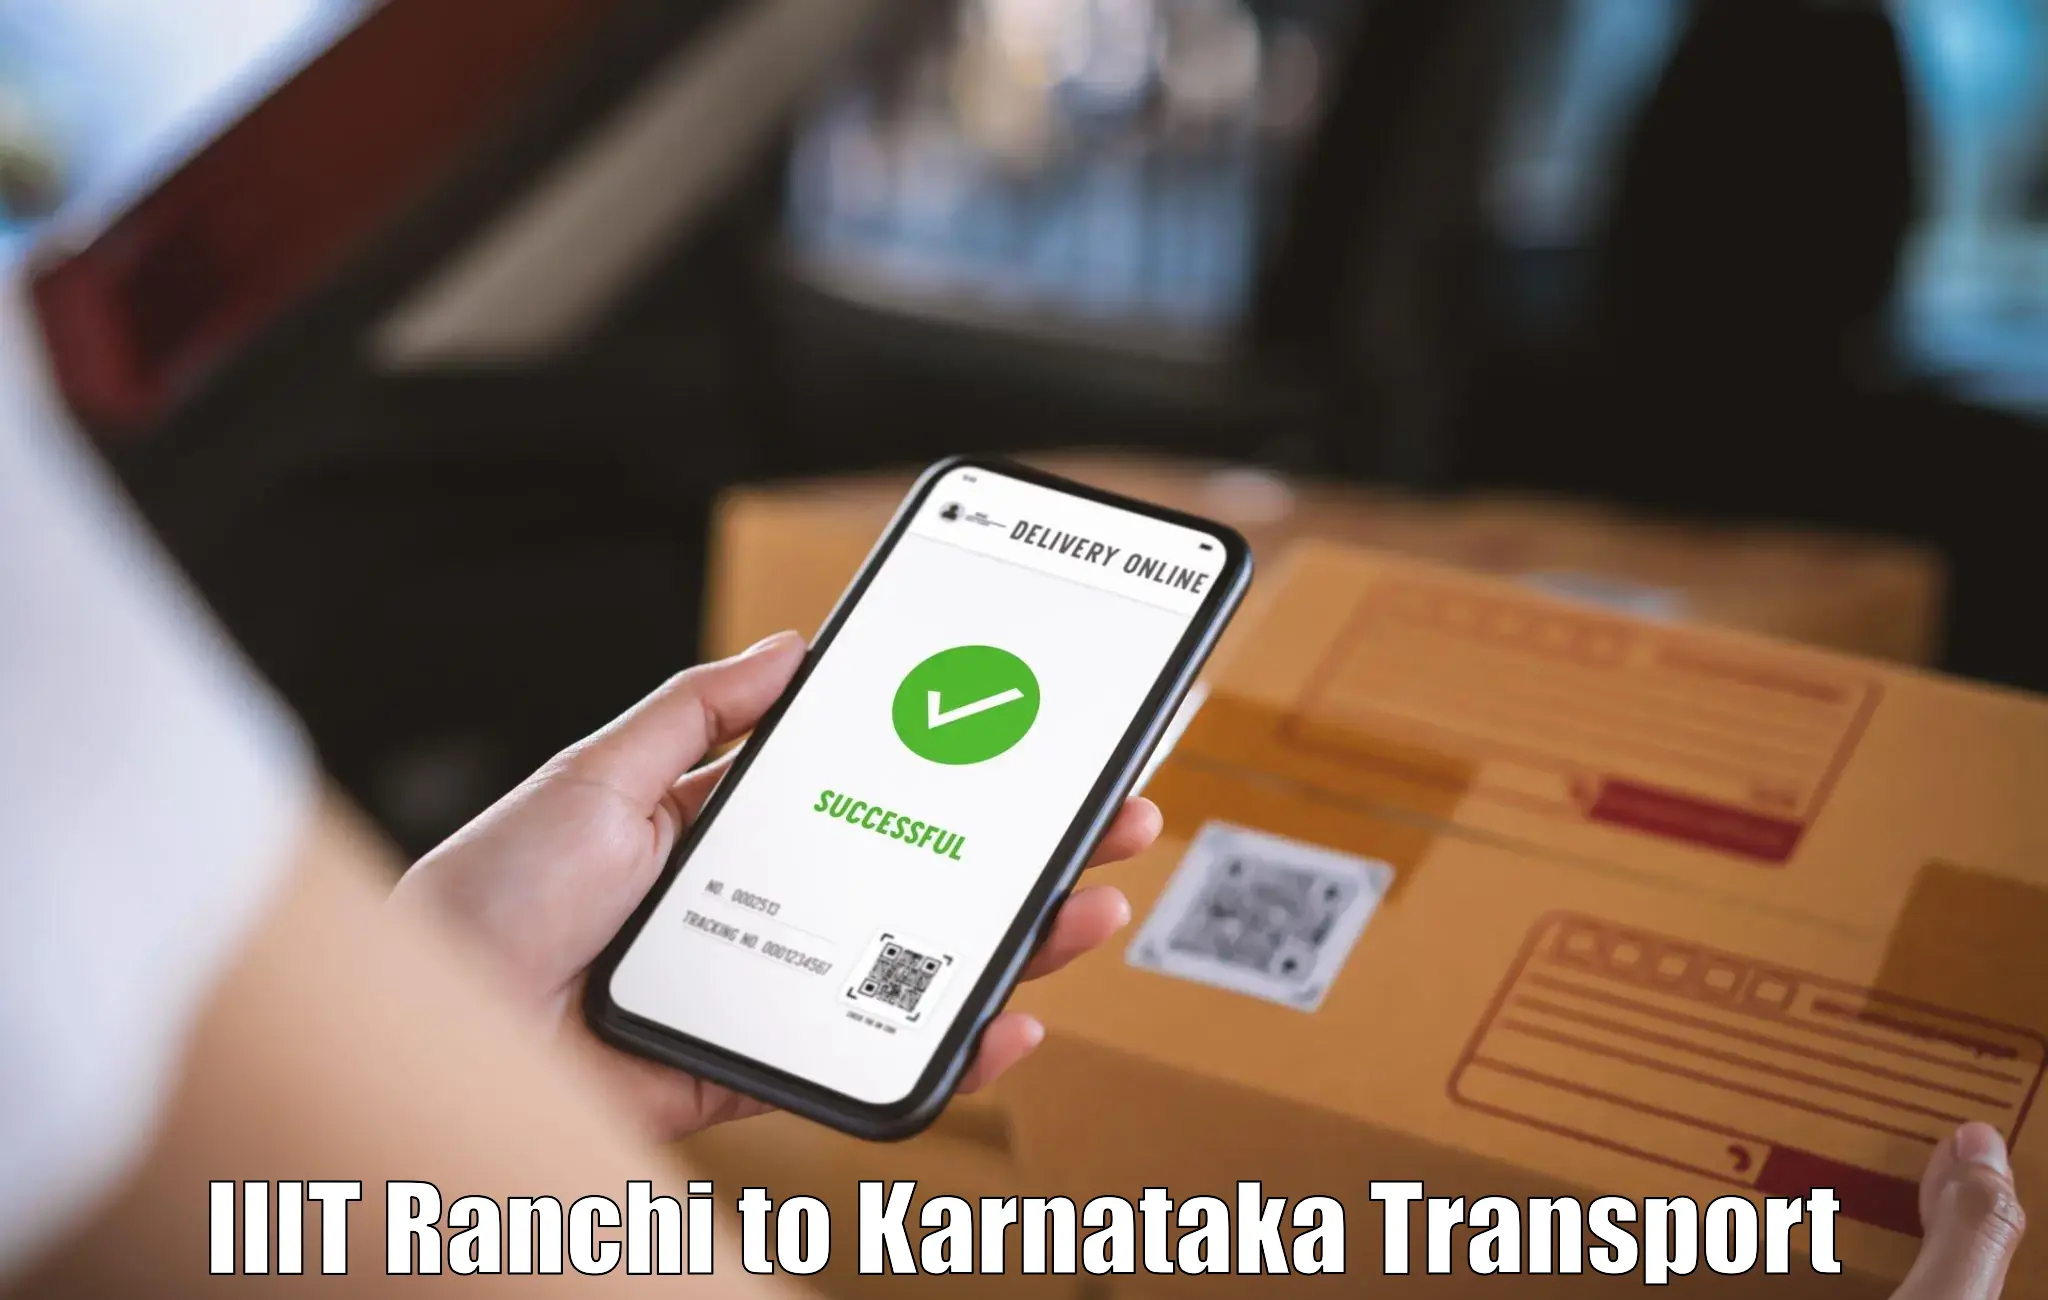 Daily transport service IIIT Ranchi to Hiriyur